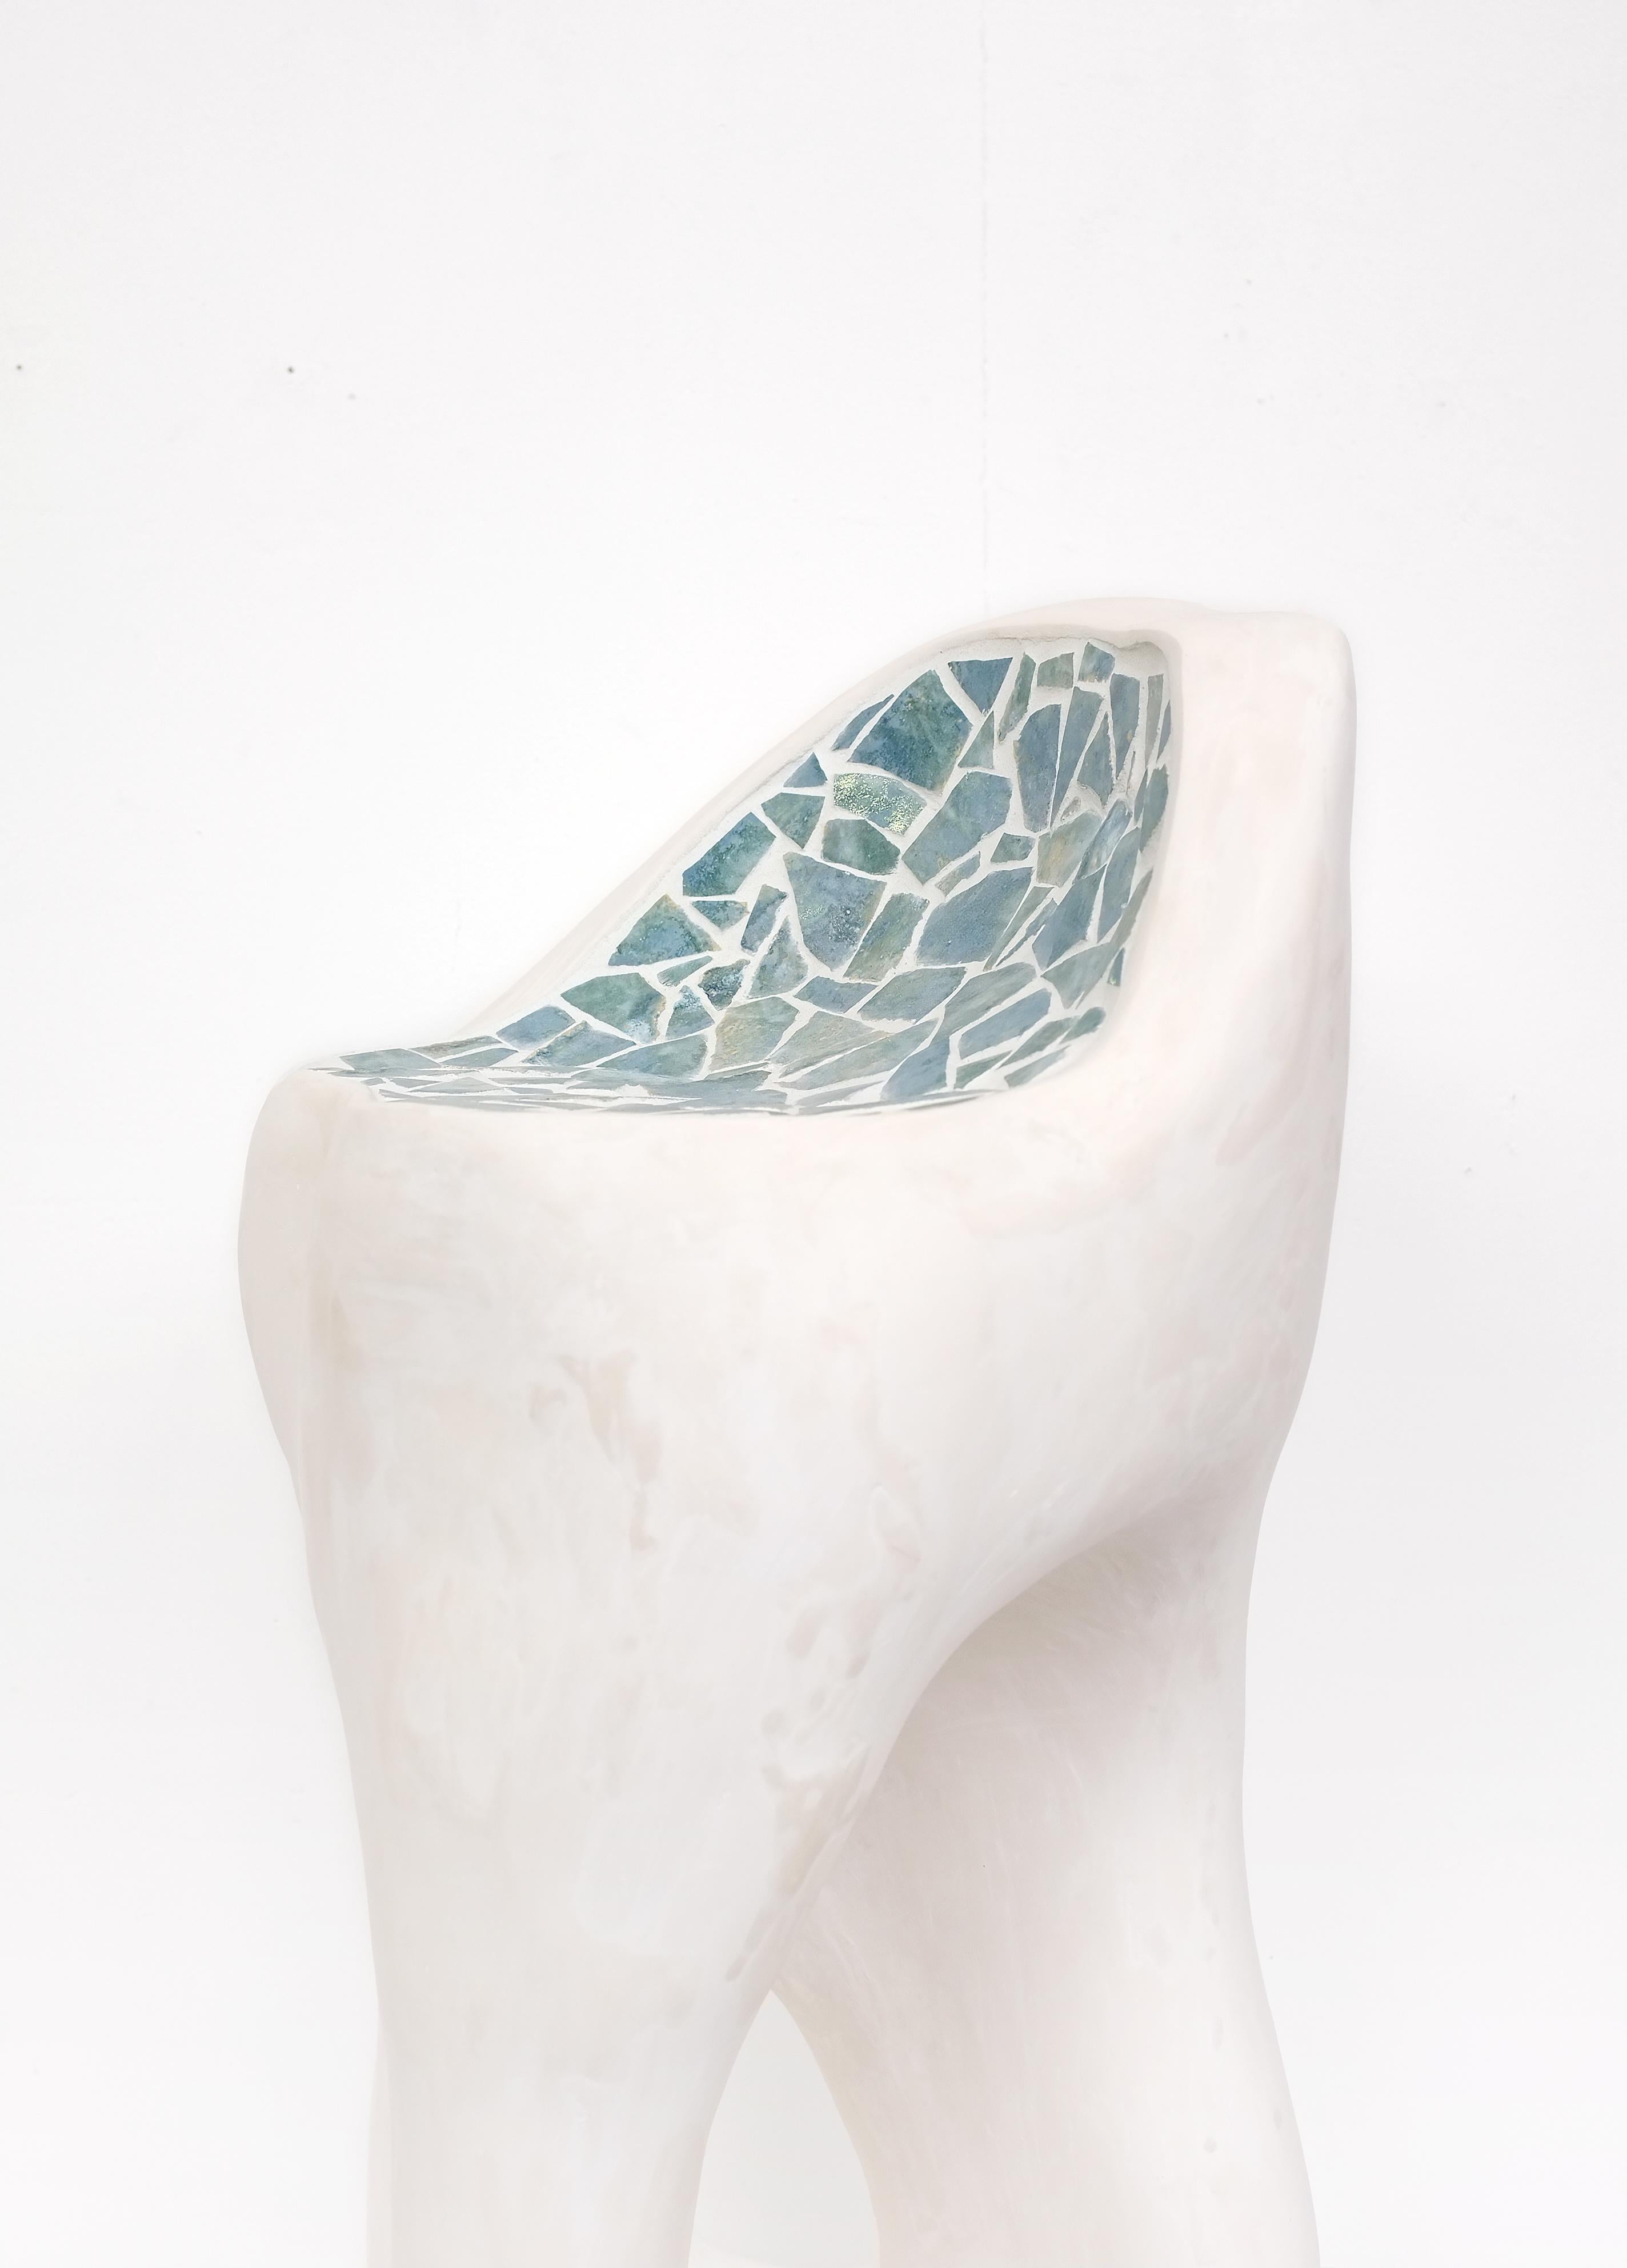 Côme Clérino Contemporary Bar Tiled stool model 